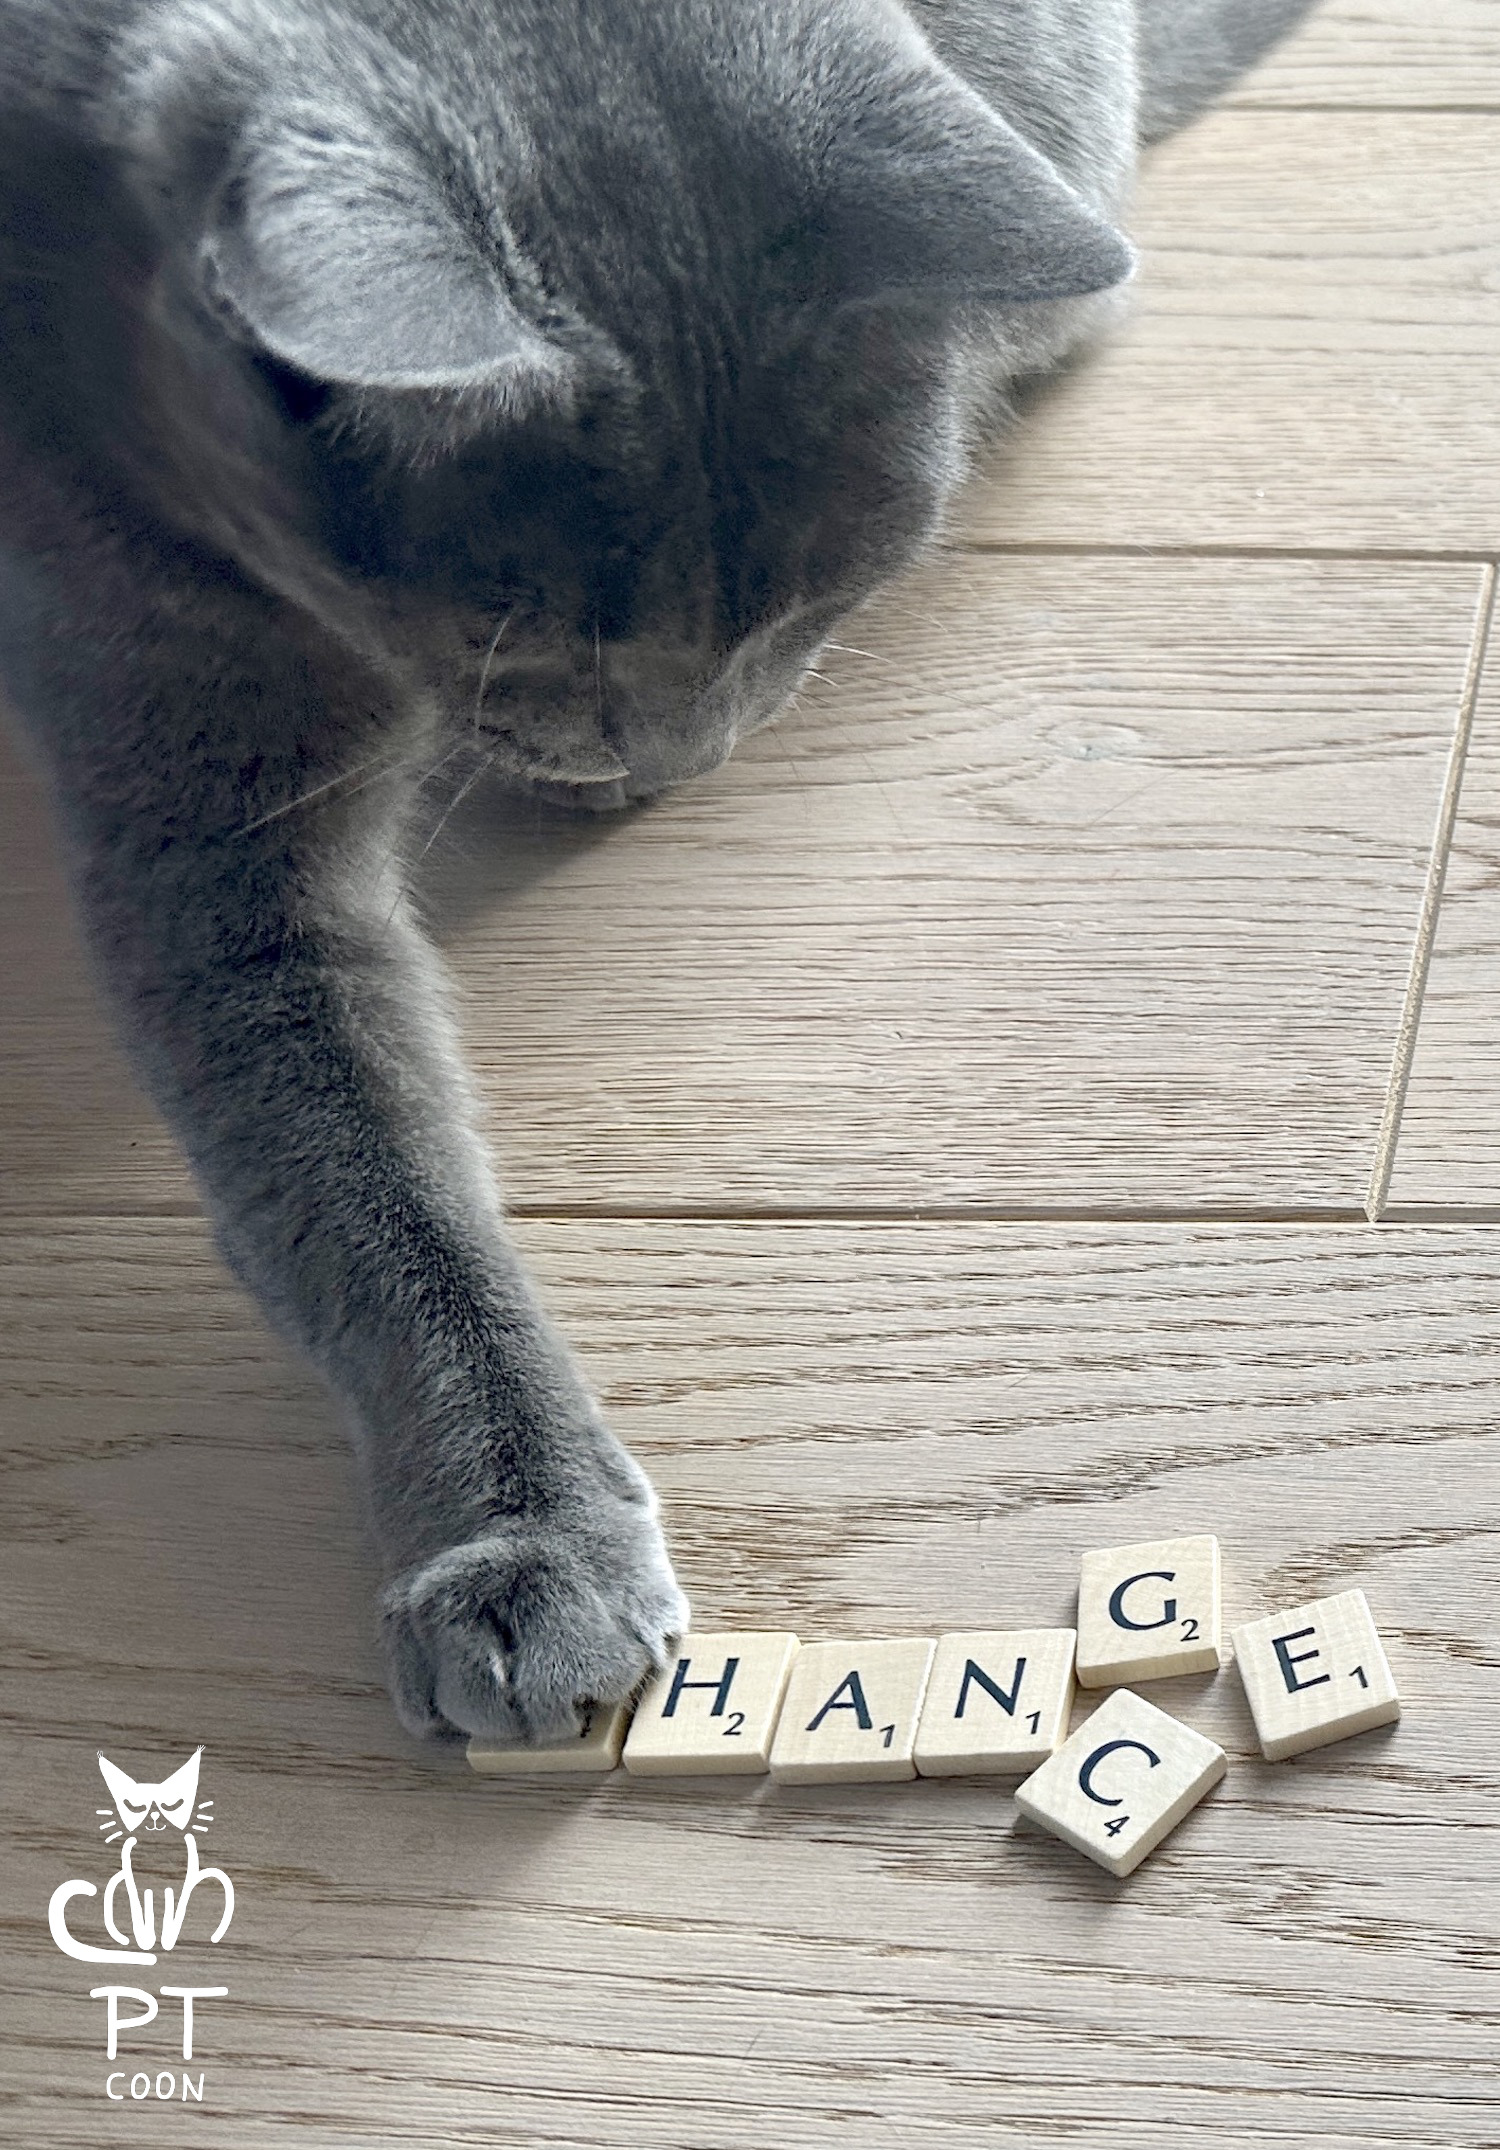 Change – Chance